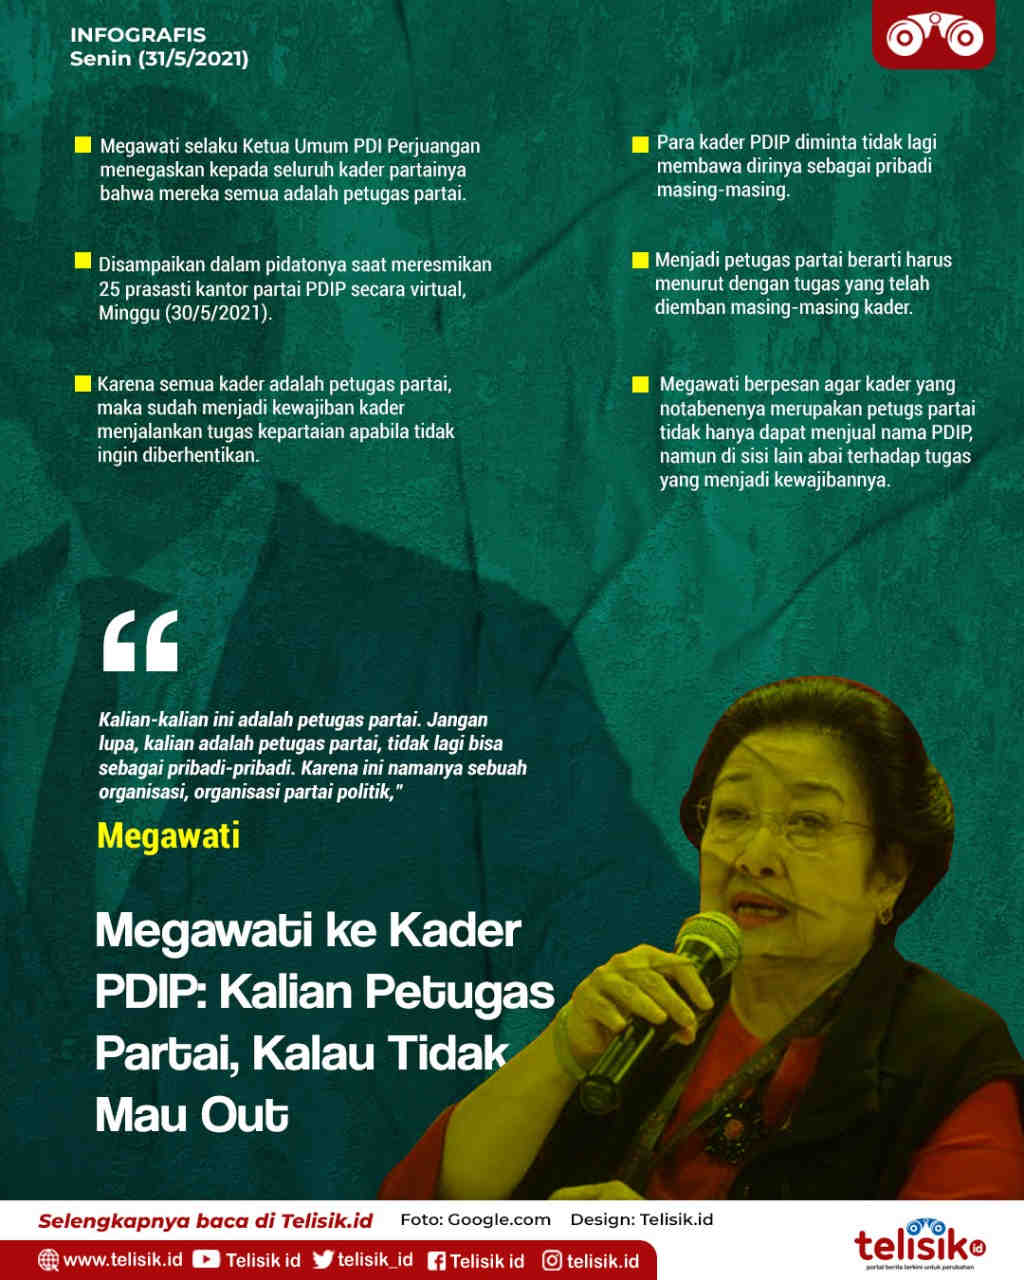 Infografis: Megawati ke Kader PDIP Sebut Kalian Petugas Partai, Kalau Tidak Mau Out